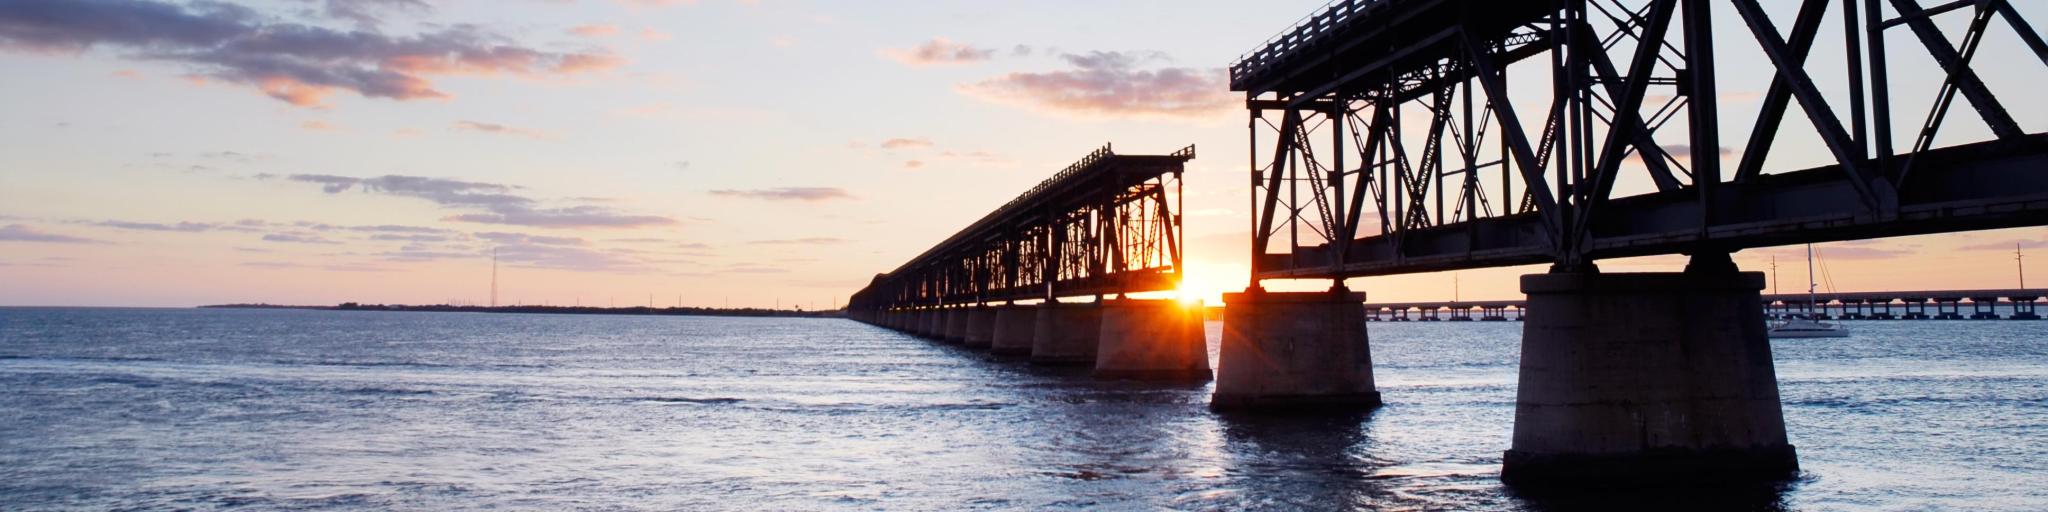 Sunset behind the historic railroad bridge at Bahia Honda State Park in the Florida Keys